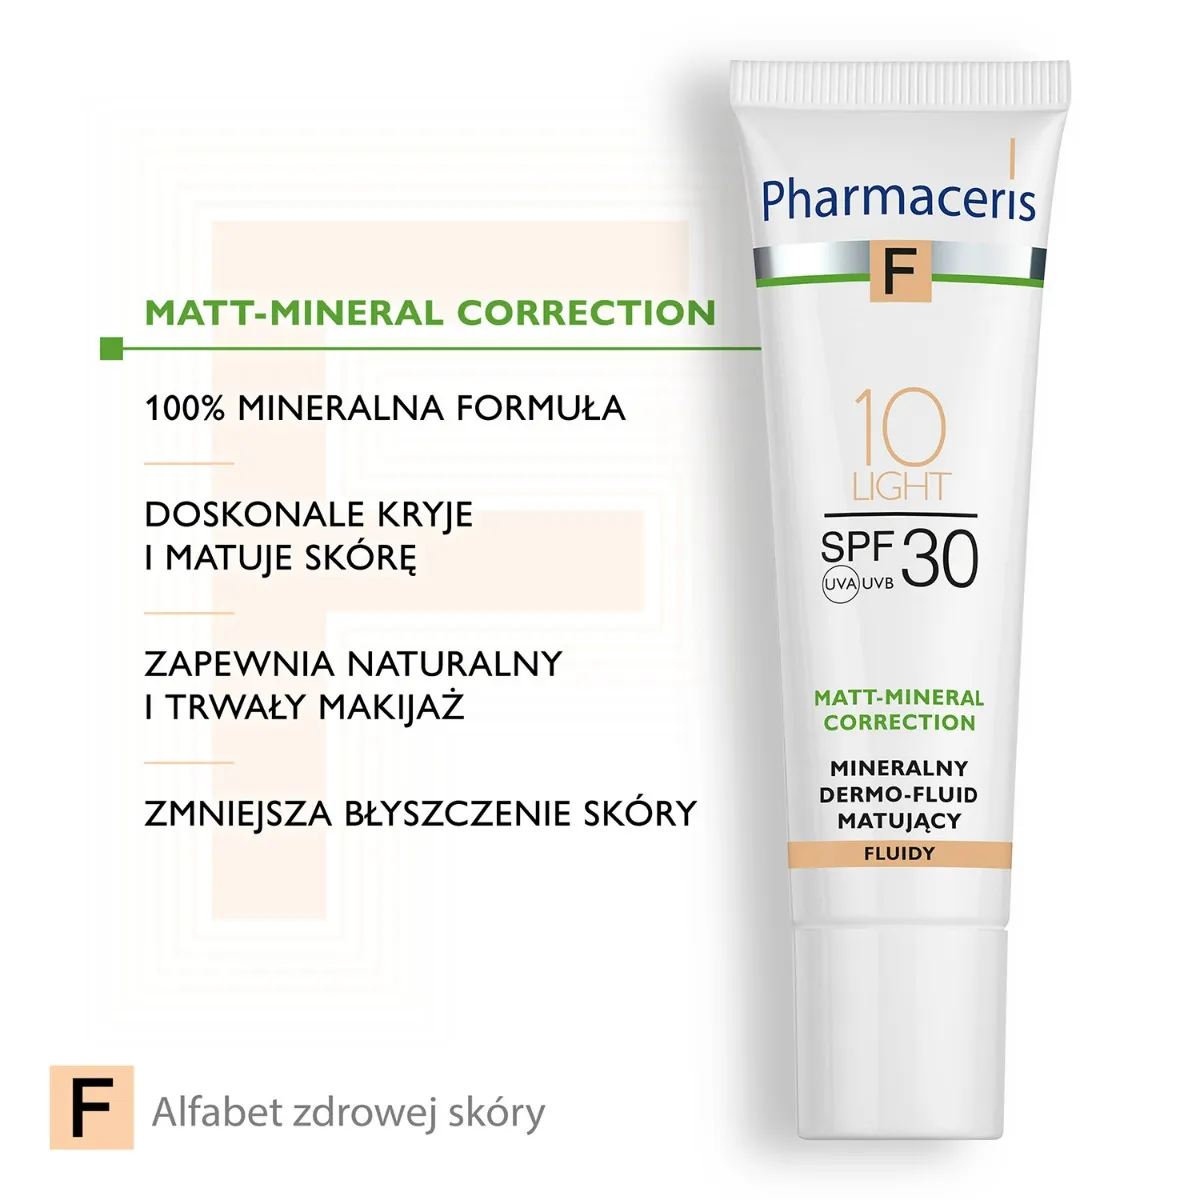 Pharmaceris F Matt-Mineral-Correction, mineralny dermo-fluid matujący, Spf 30, light 10, 40 ml 